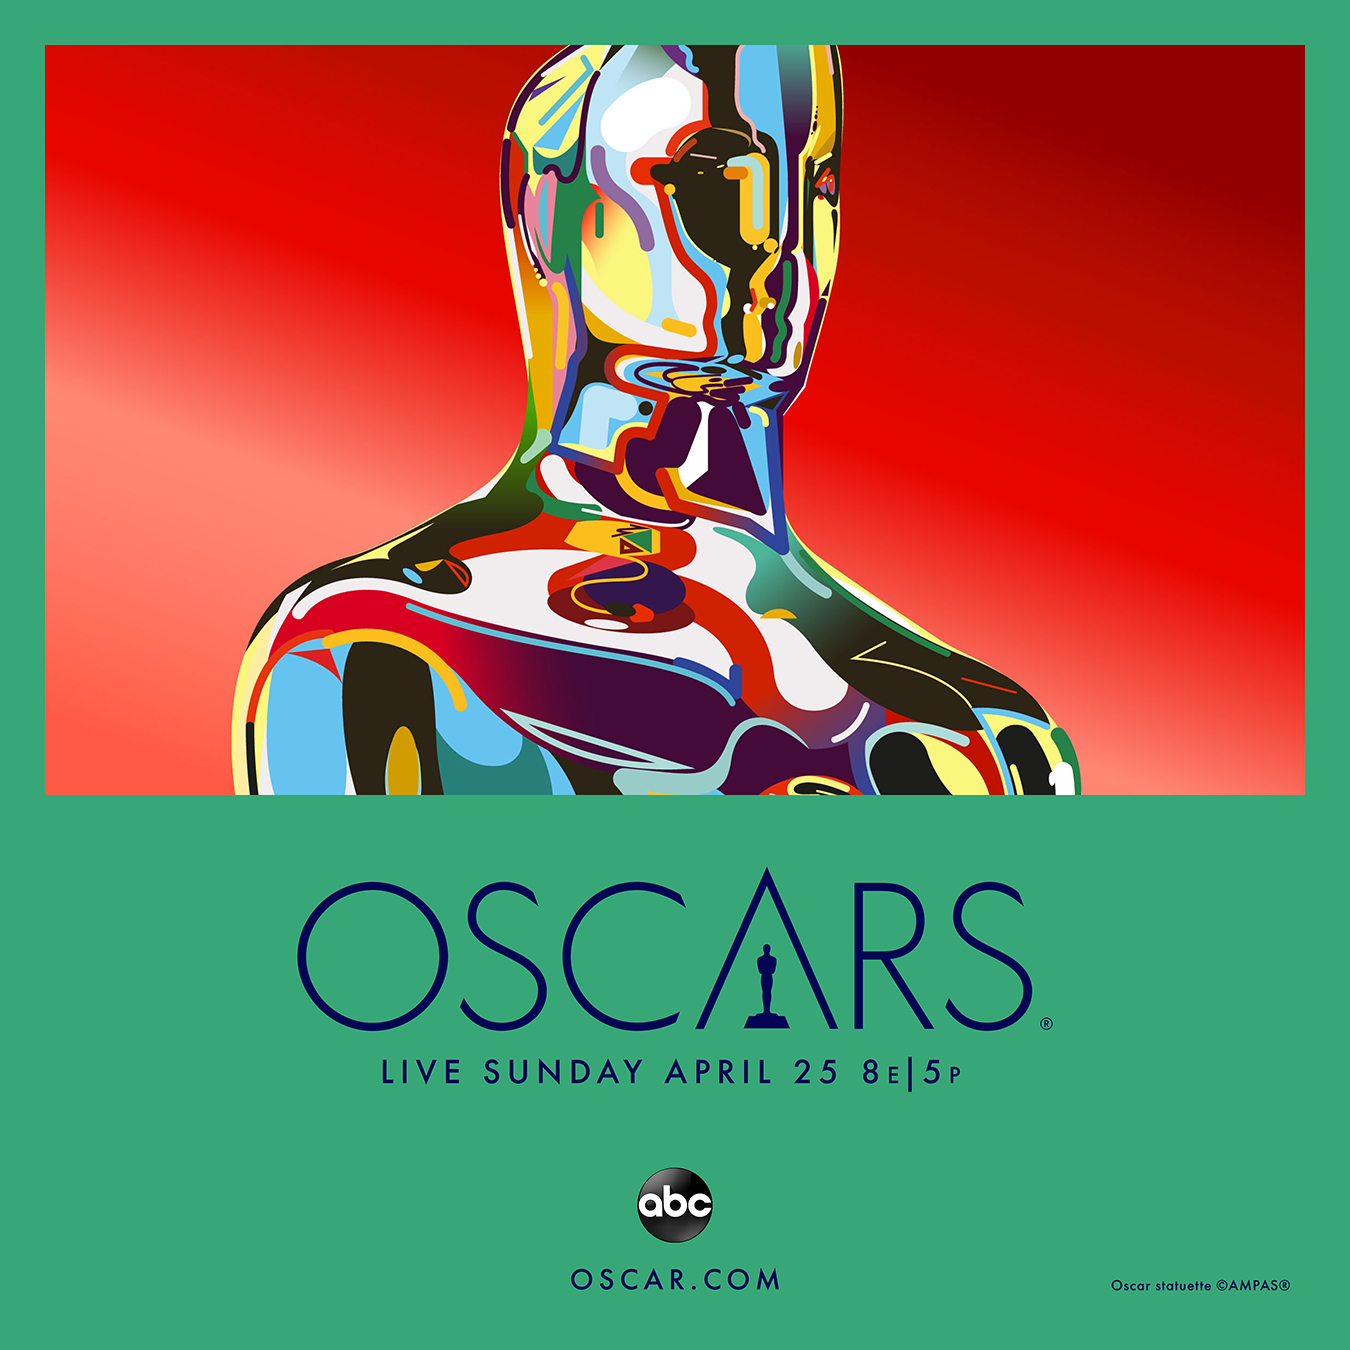 93rd Oscars’ campaign art by Magnus Voll Mathiassen